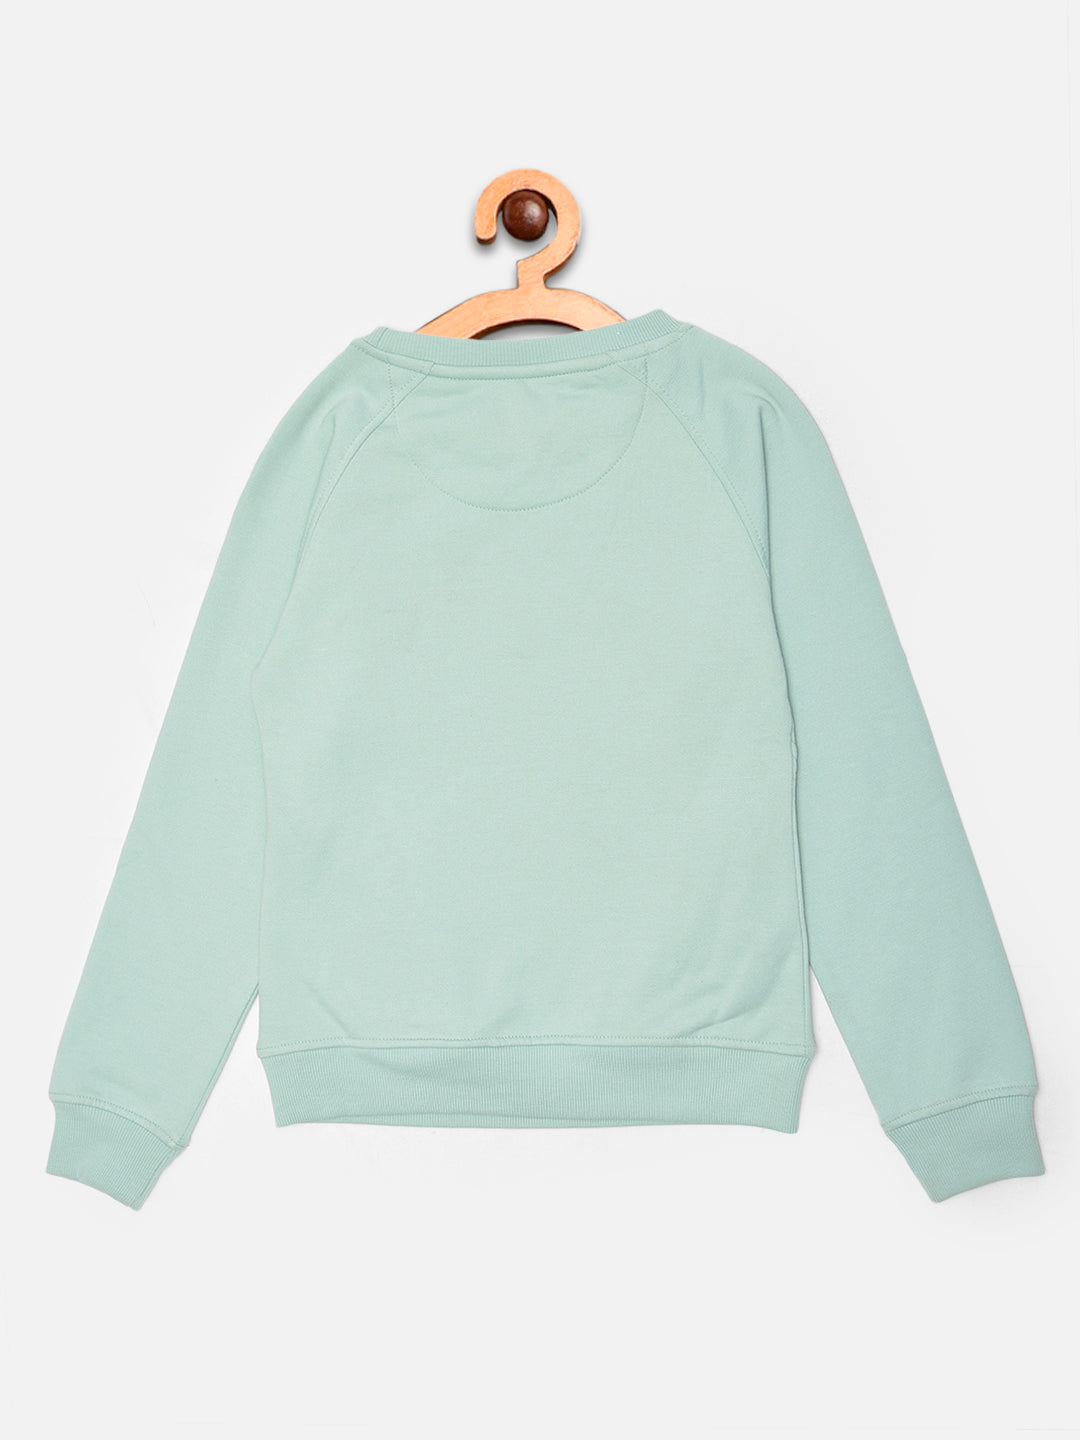 Mint Green Printed Round Neck Sweatshirt - Girls Sweatshirts